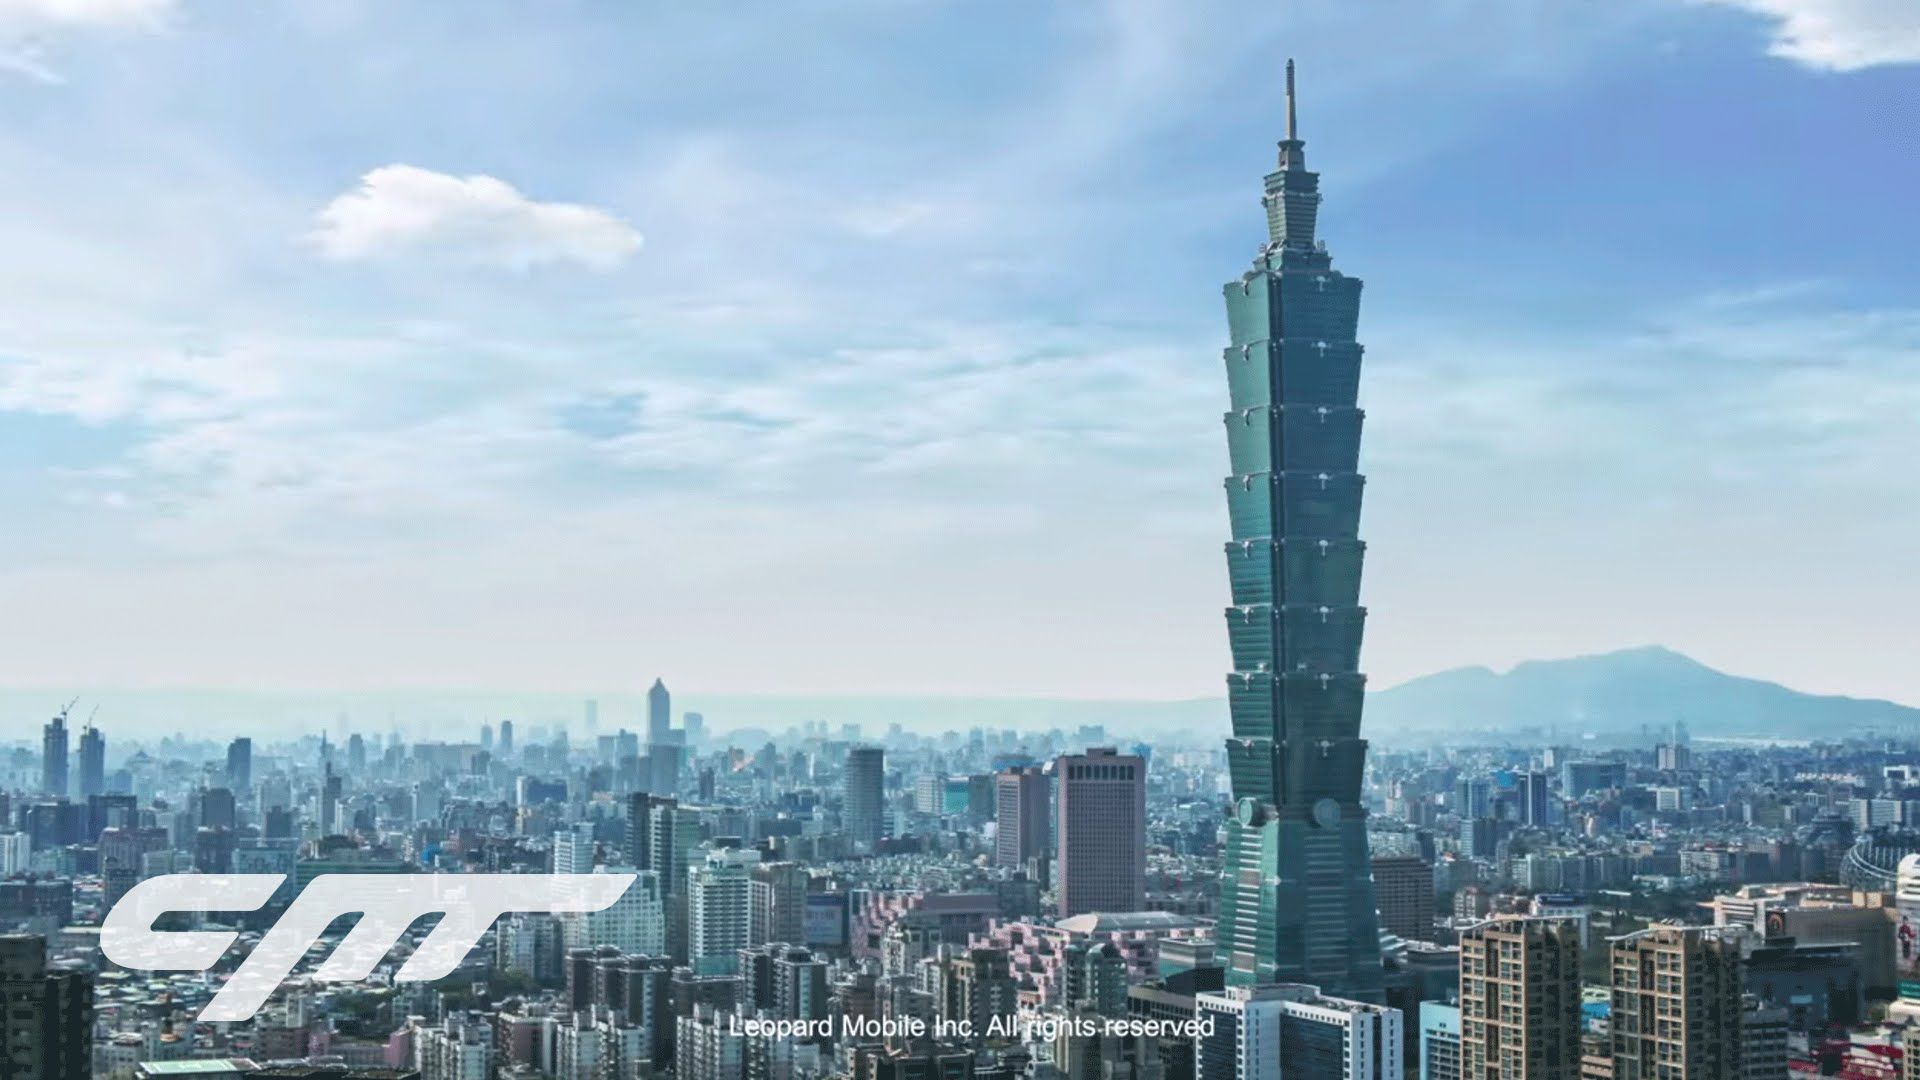 Cheetah Mobile Taiwan Partner - Grand Opening at TAIPEI 101 - YouTube